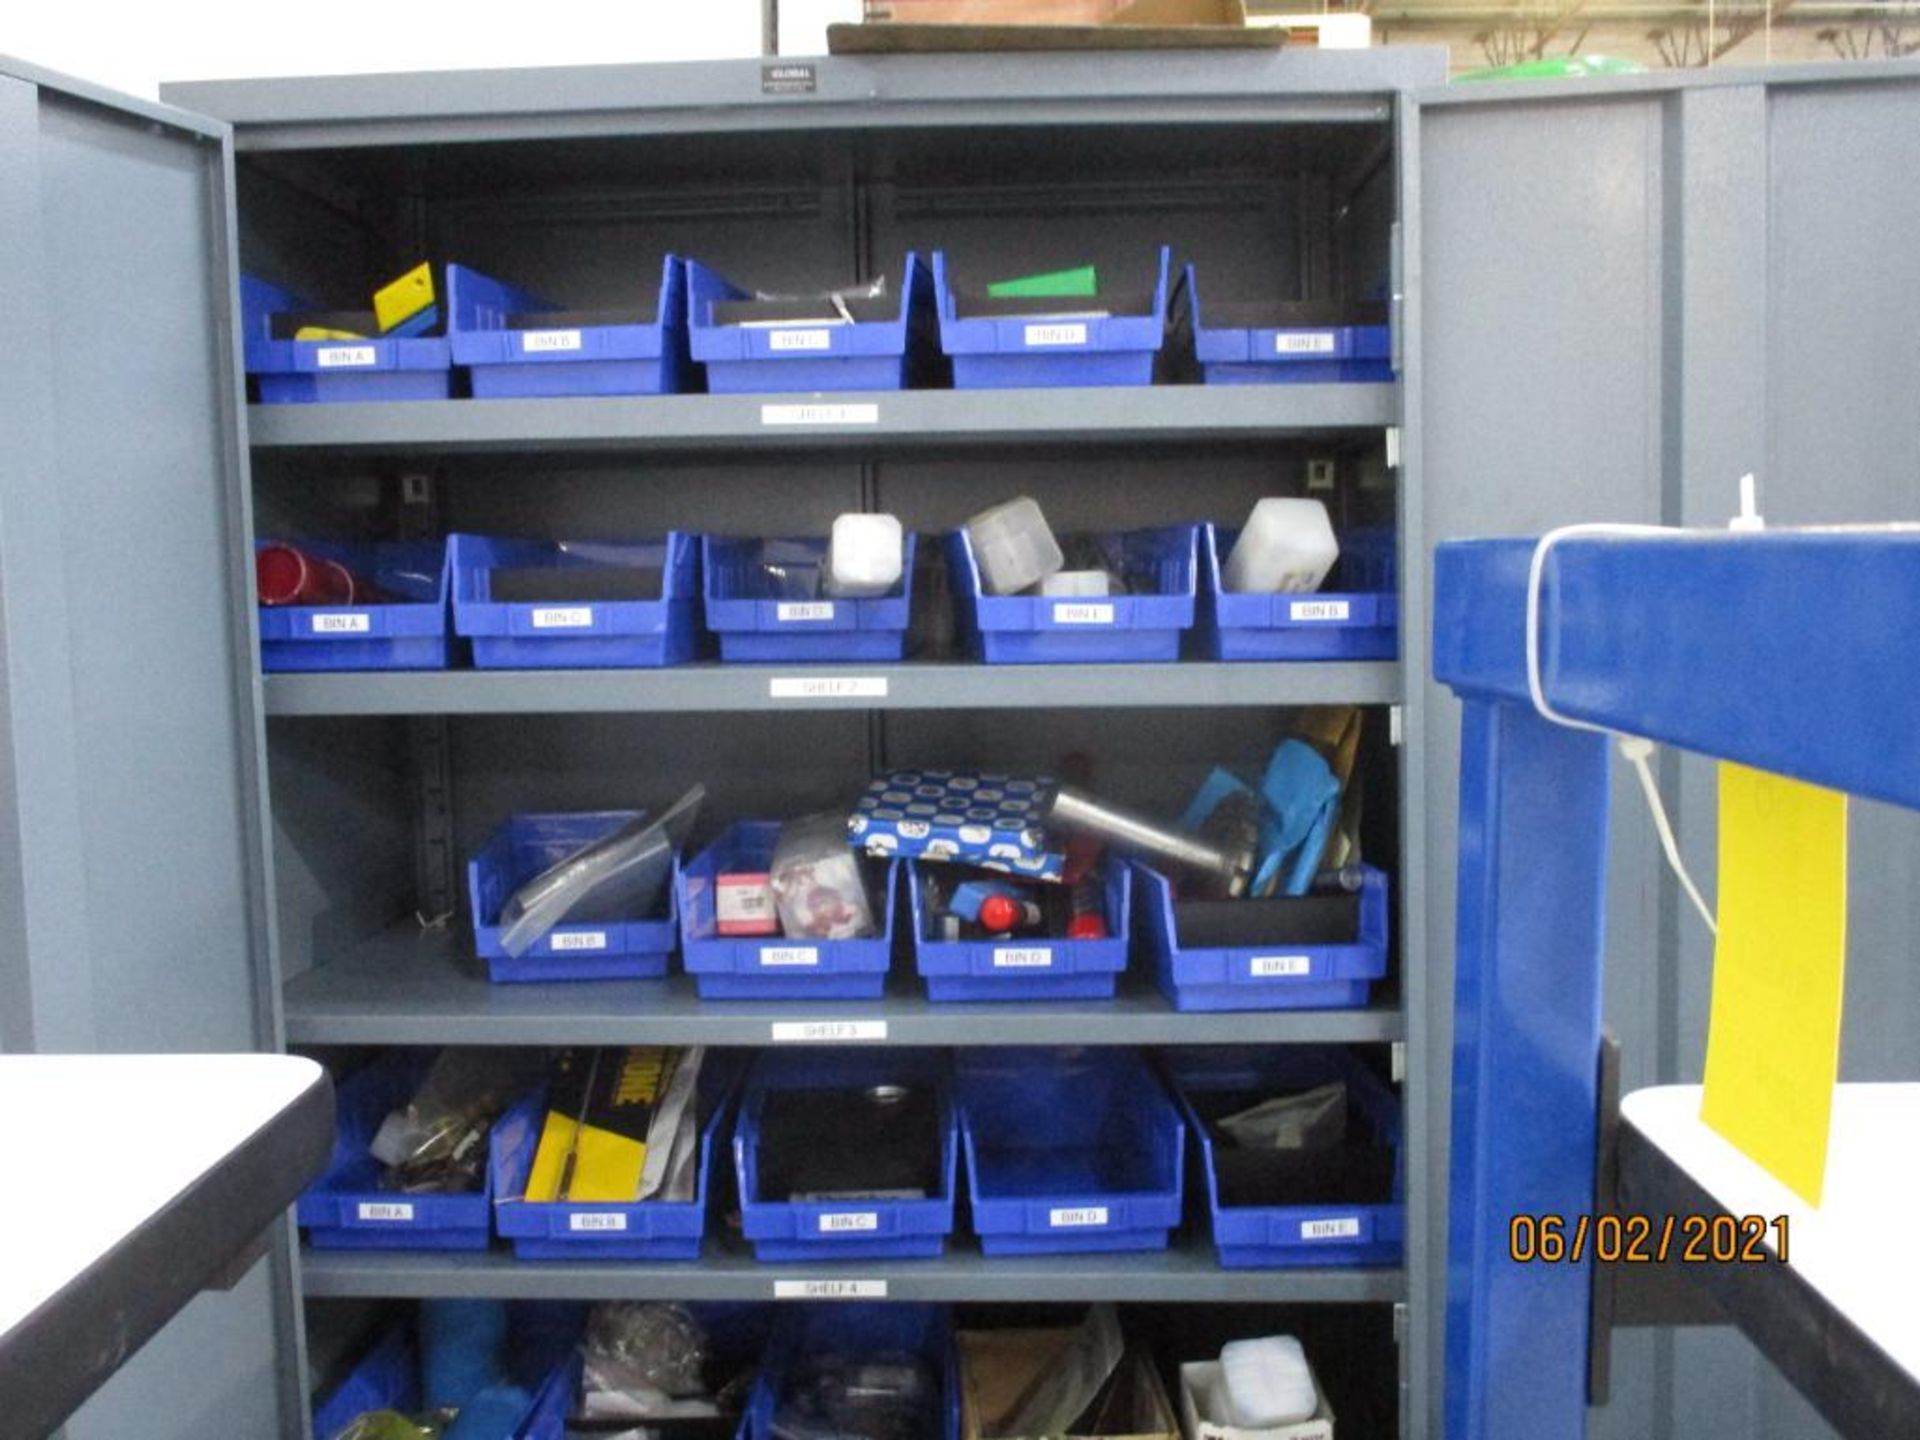 Steel 2-Door Cabinet w/Miscellaneous Supplies, Plug Gages, Plastic Bins, etc. - Image 2 of 4